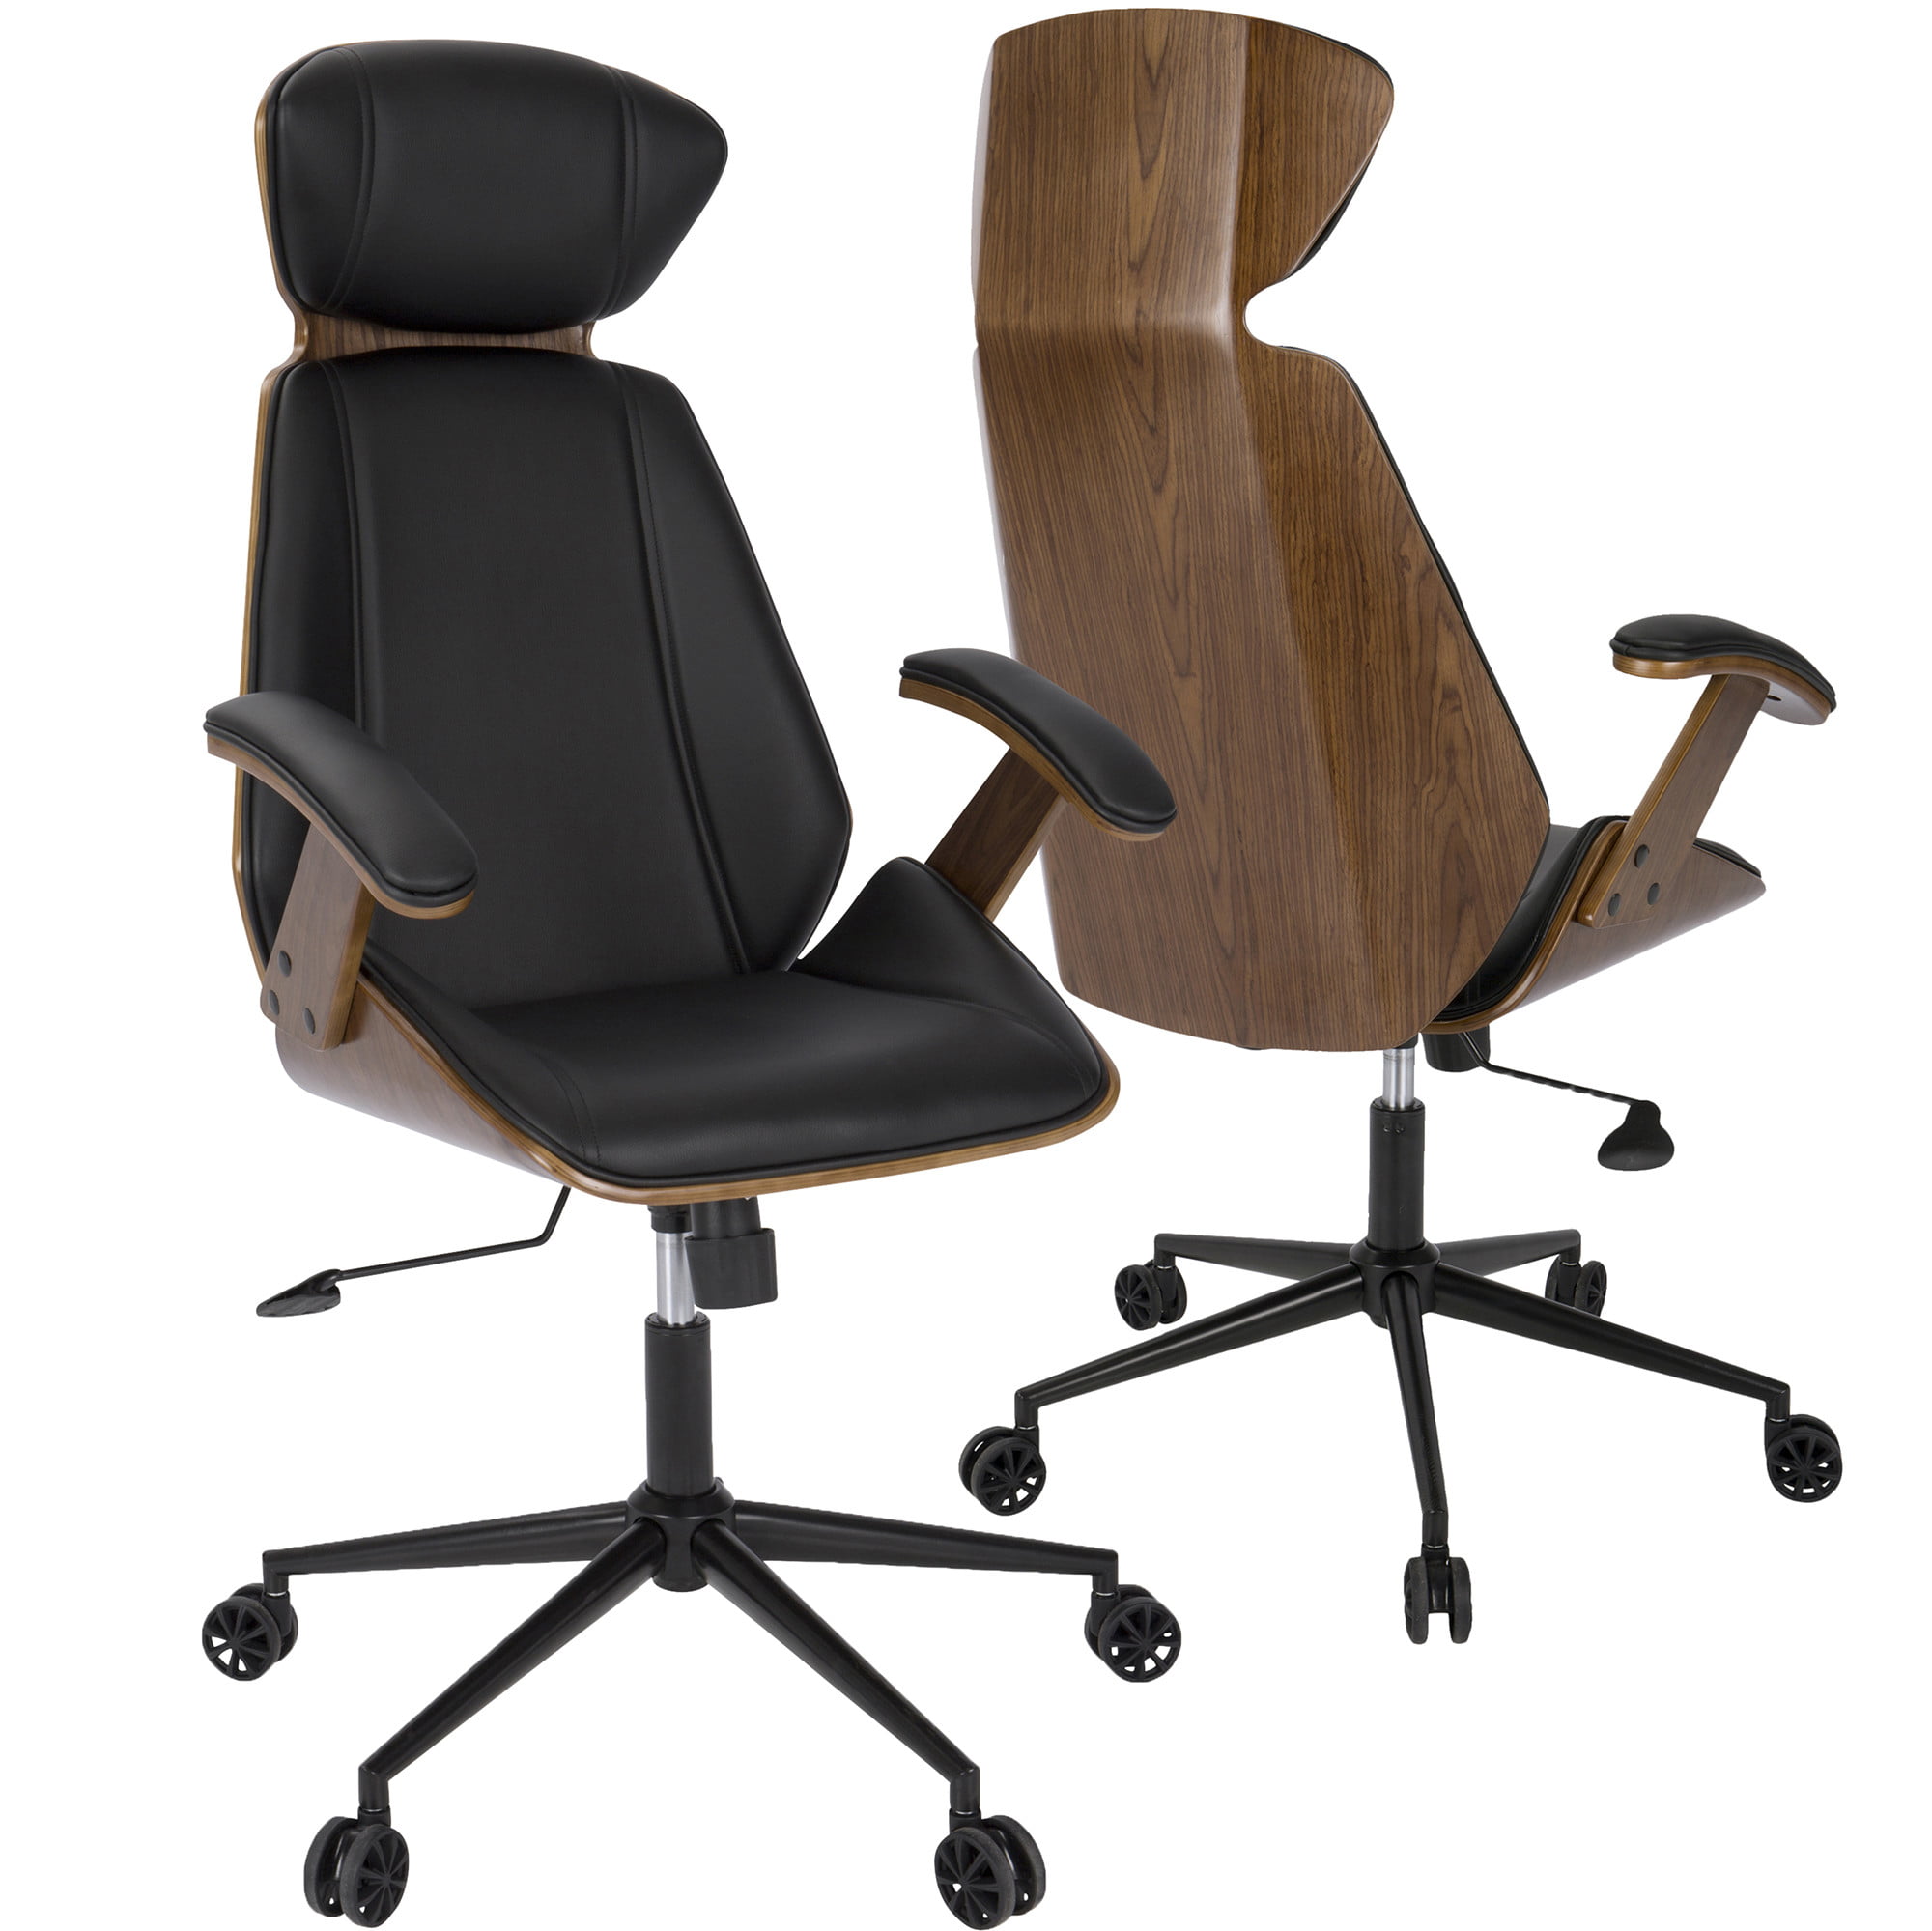 Spectre Mid Century Modern Adjustable Office Chair in Walnut Wood 